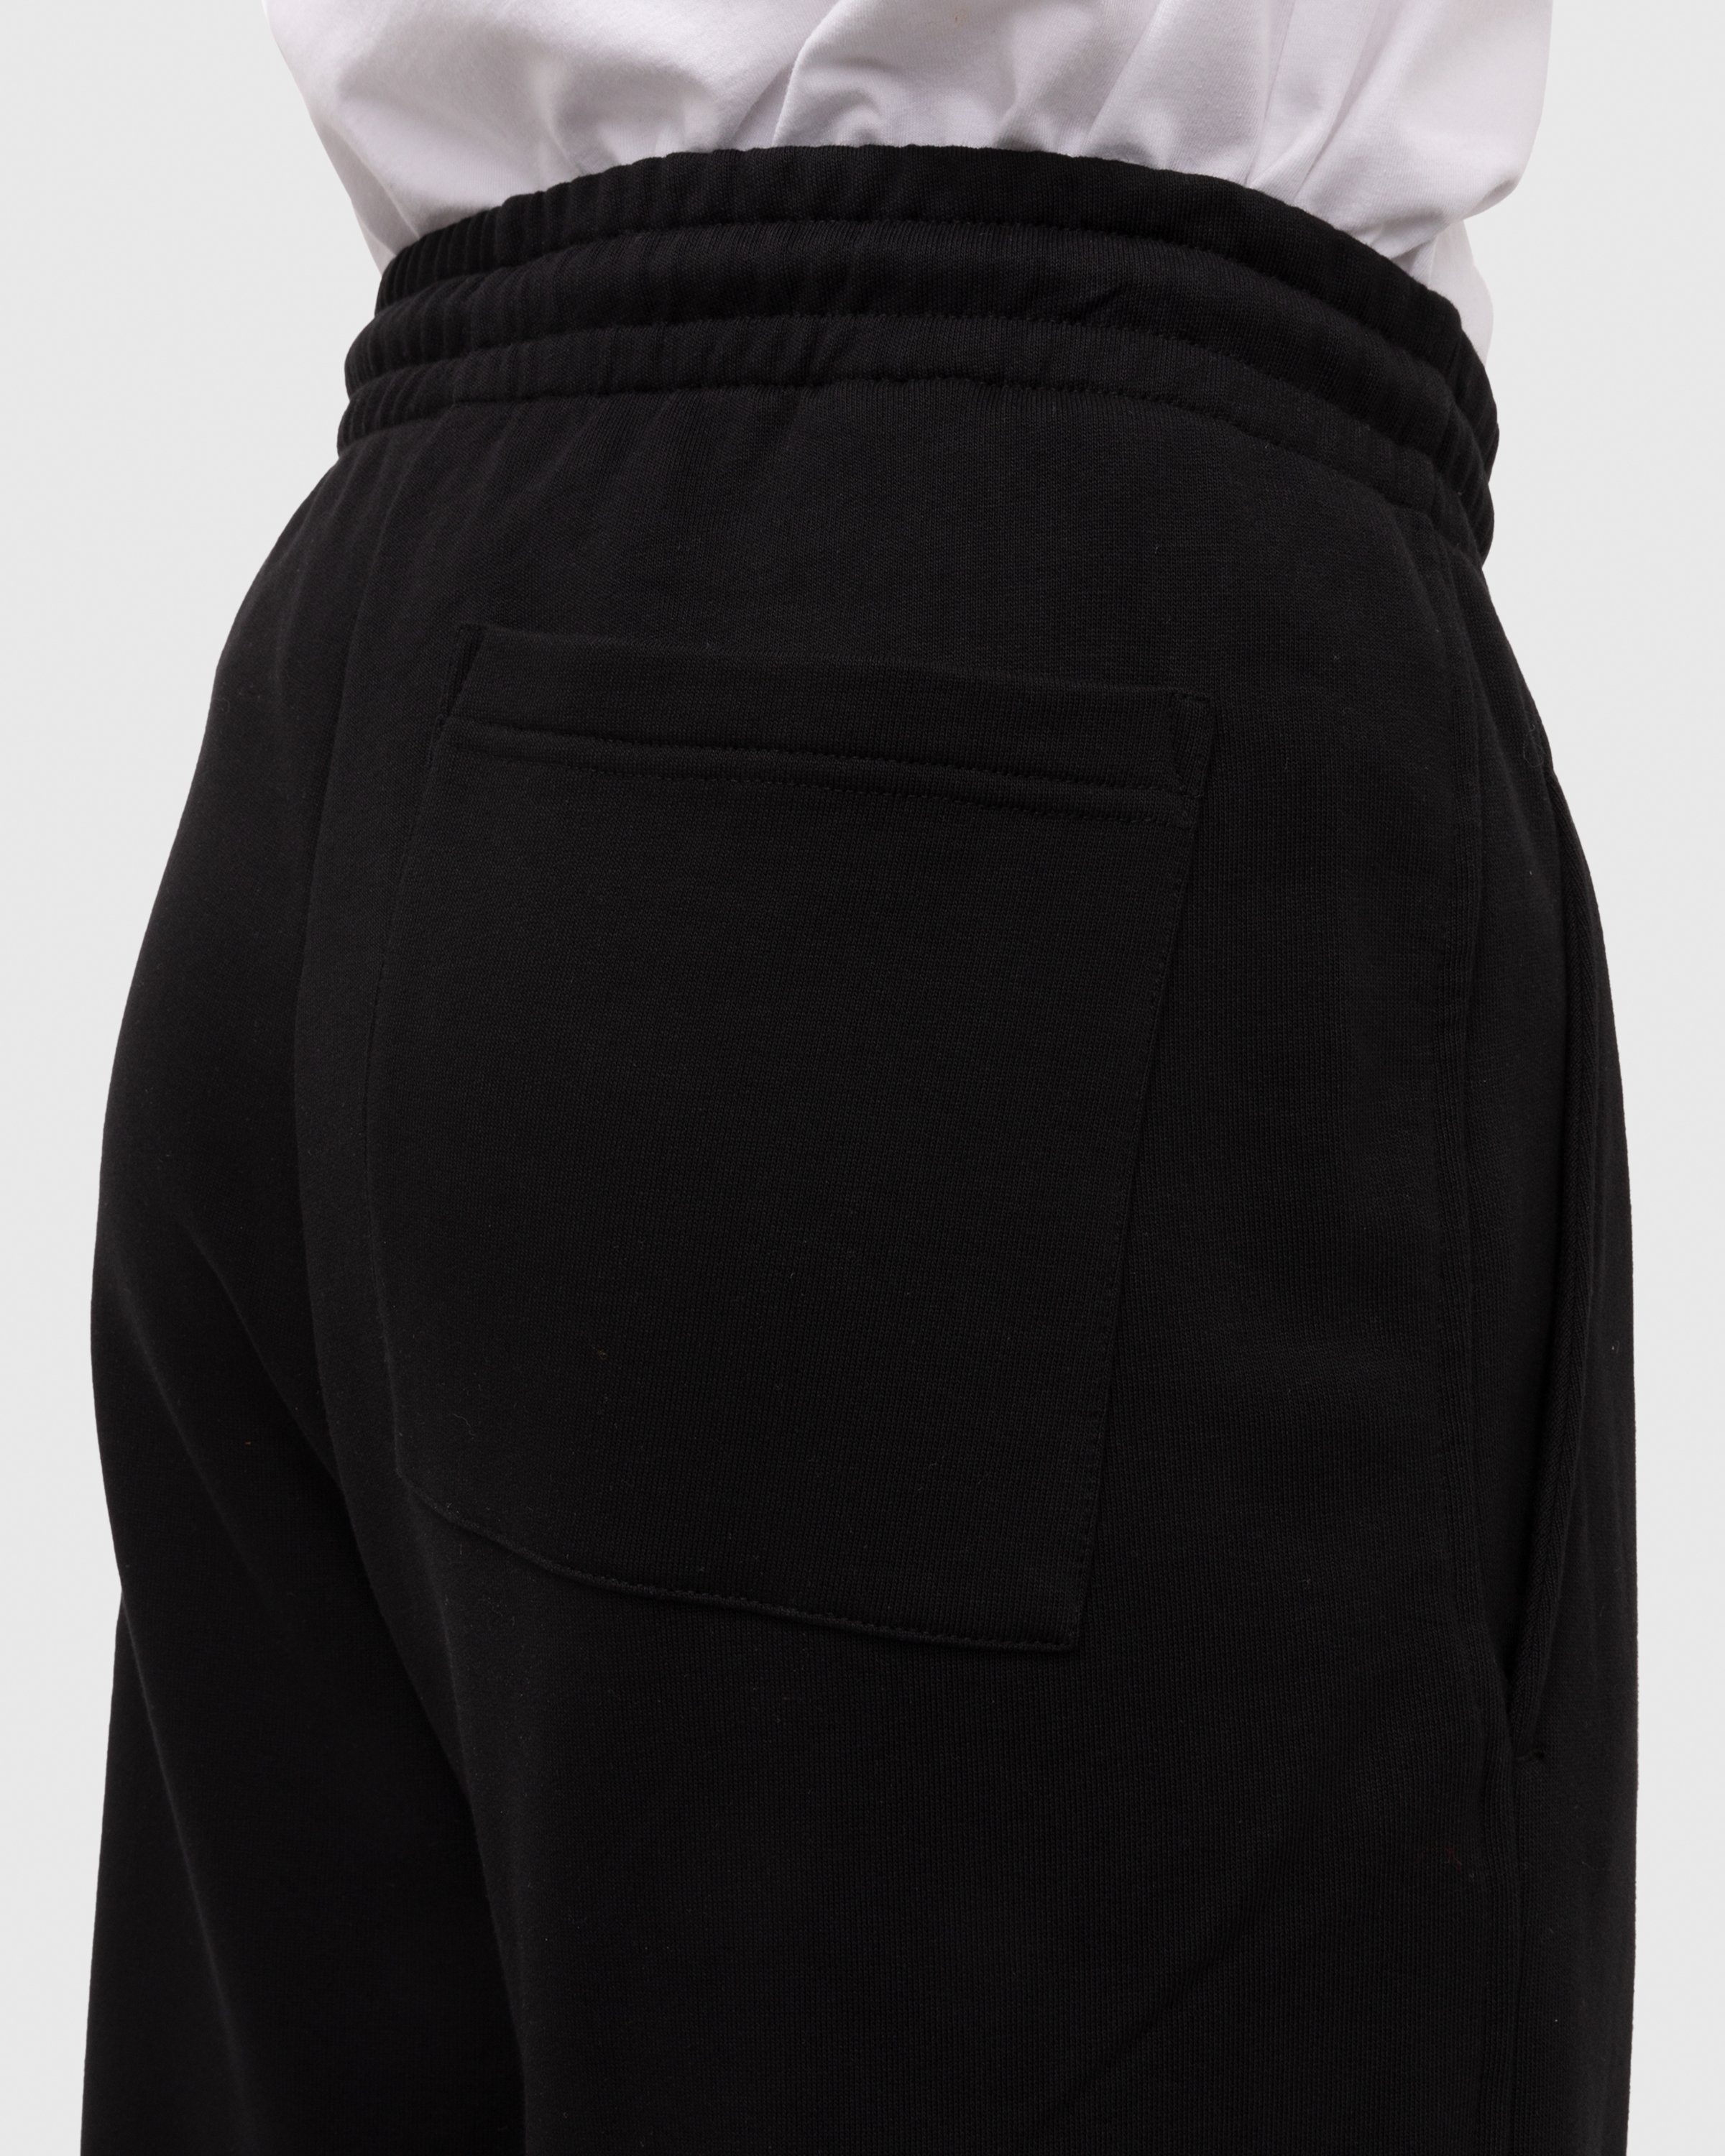 Dries van Noten – Hamer Sweatpants Black - Pants - Black - Image 5